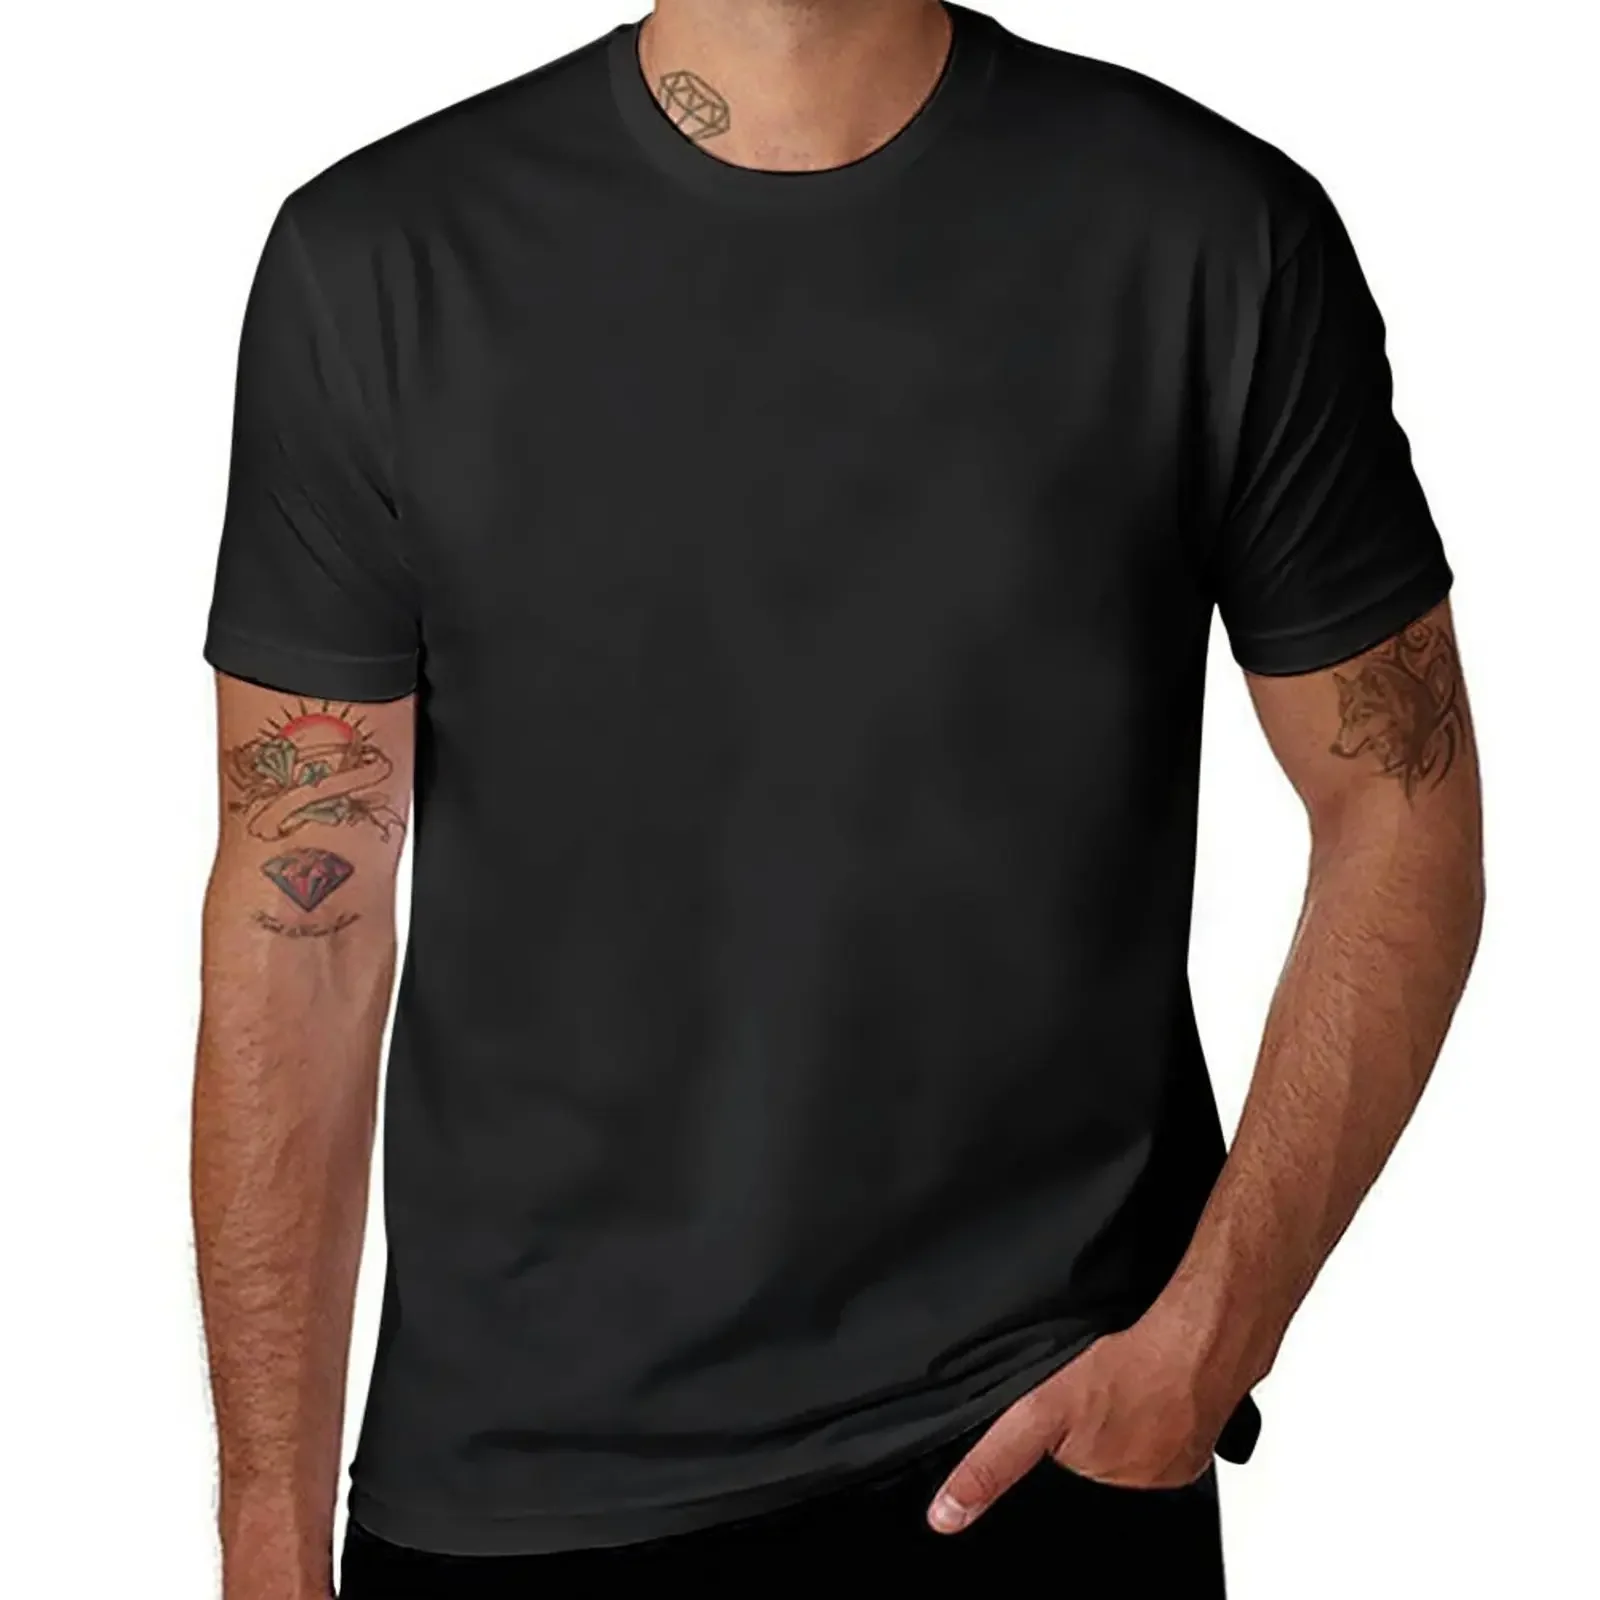 VANTABLACK T-Shirt sublime sweat Blouse t shirts for men